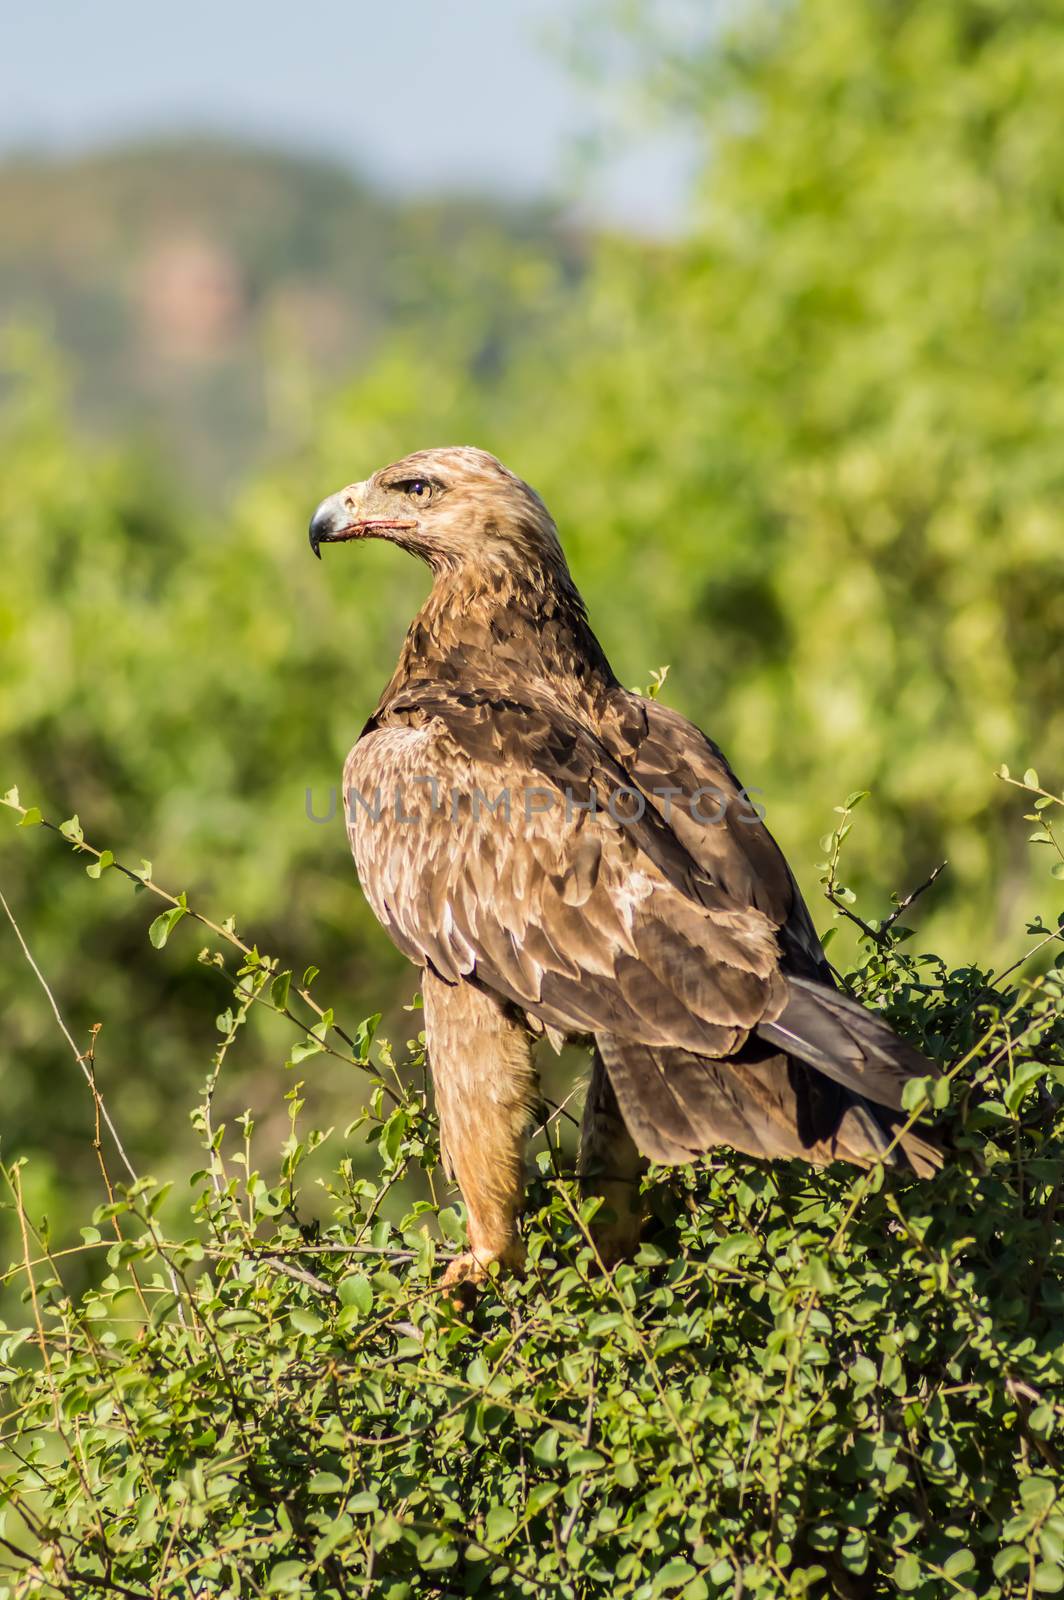 Raven eagle on a tree in samburu park in central Kenya with blood on beak